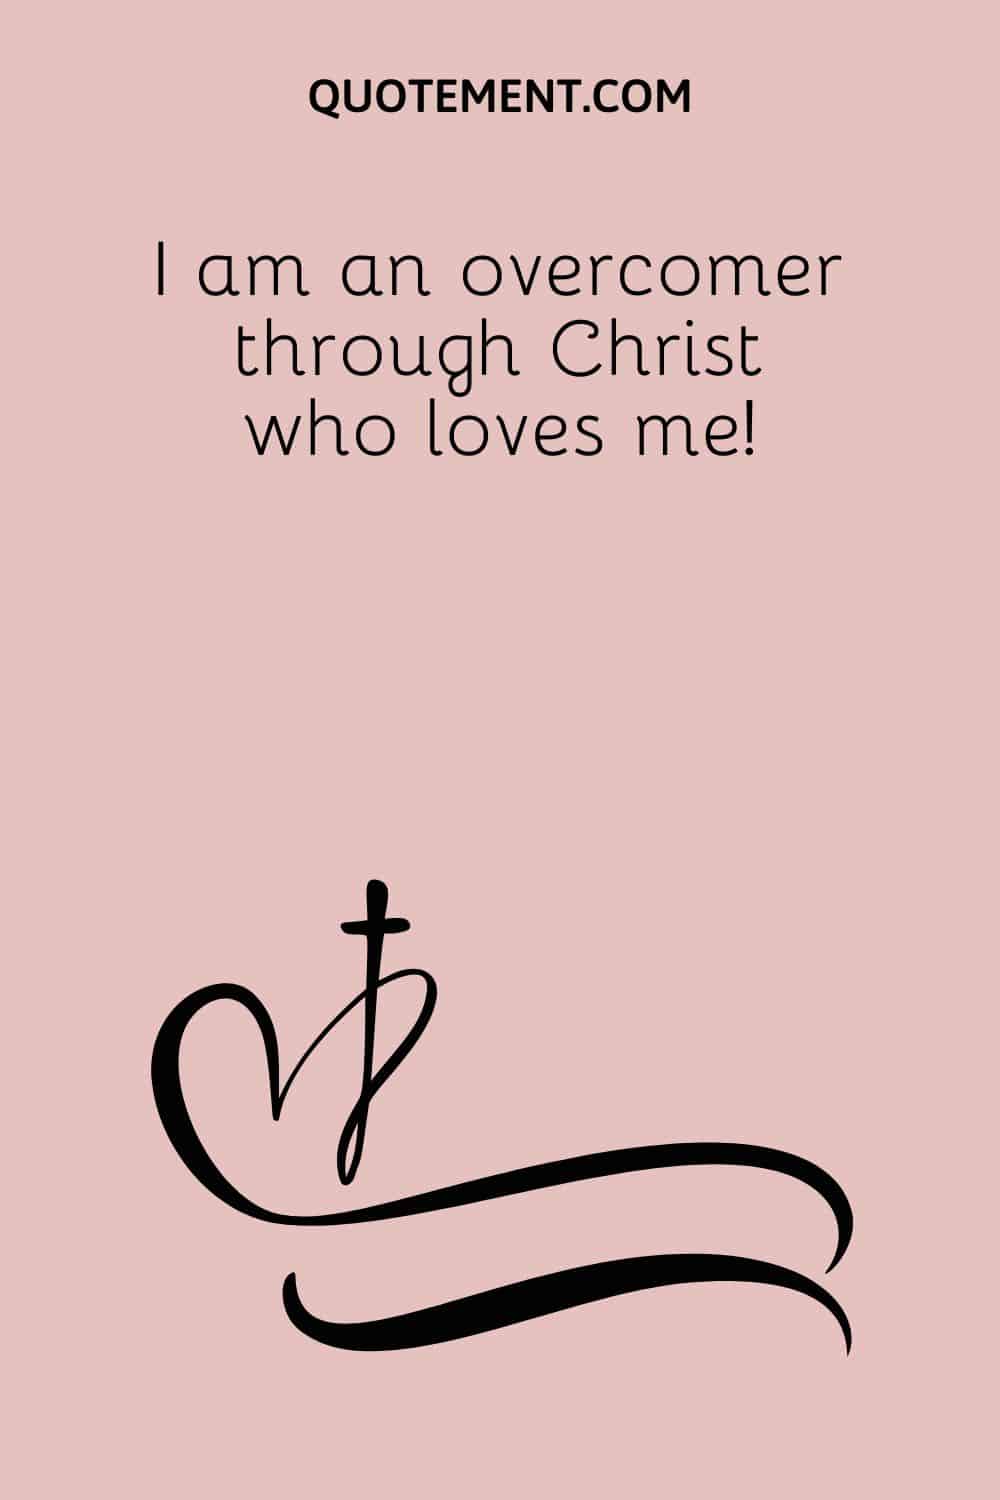 I am an overcomer through Christ who loves me